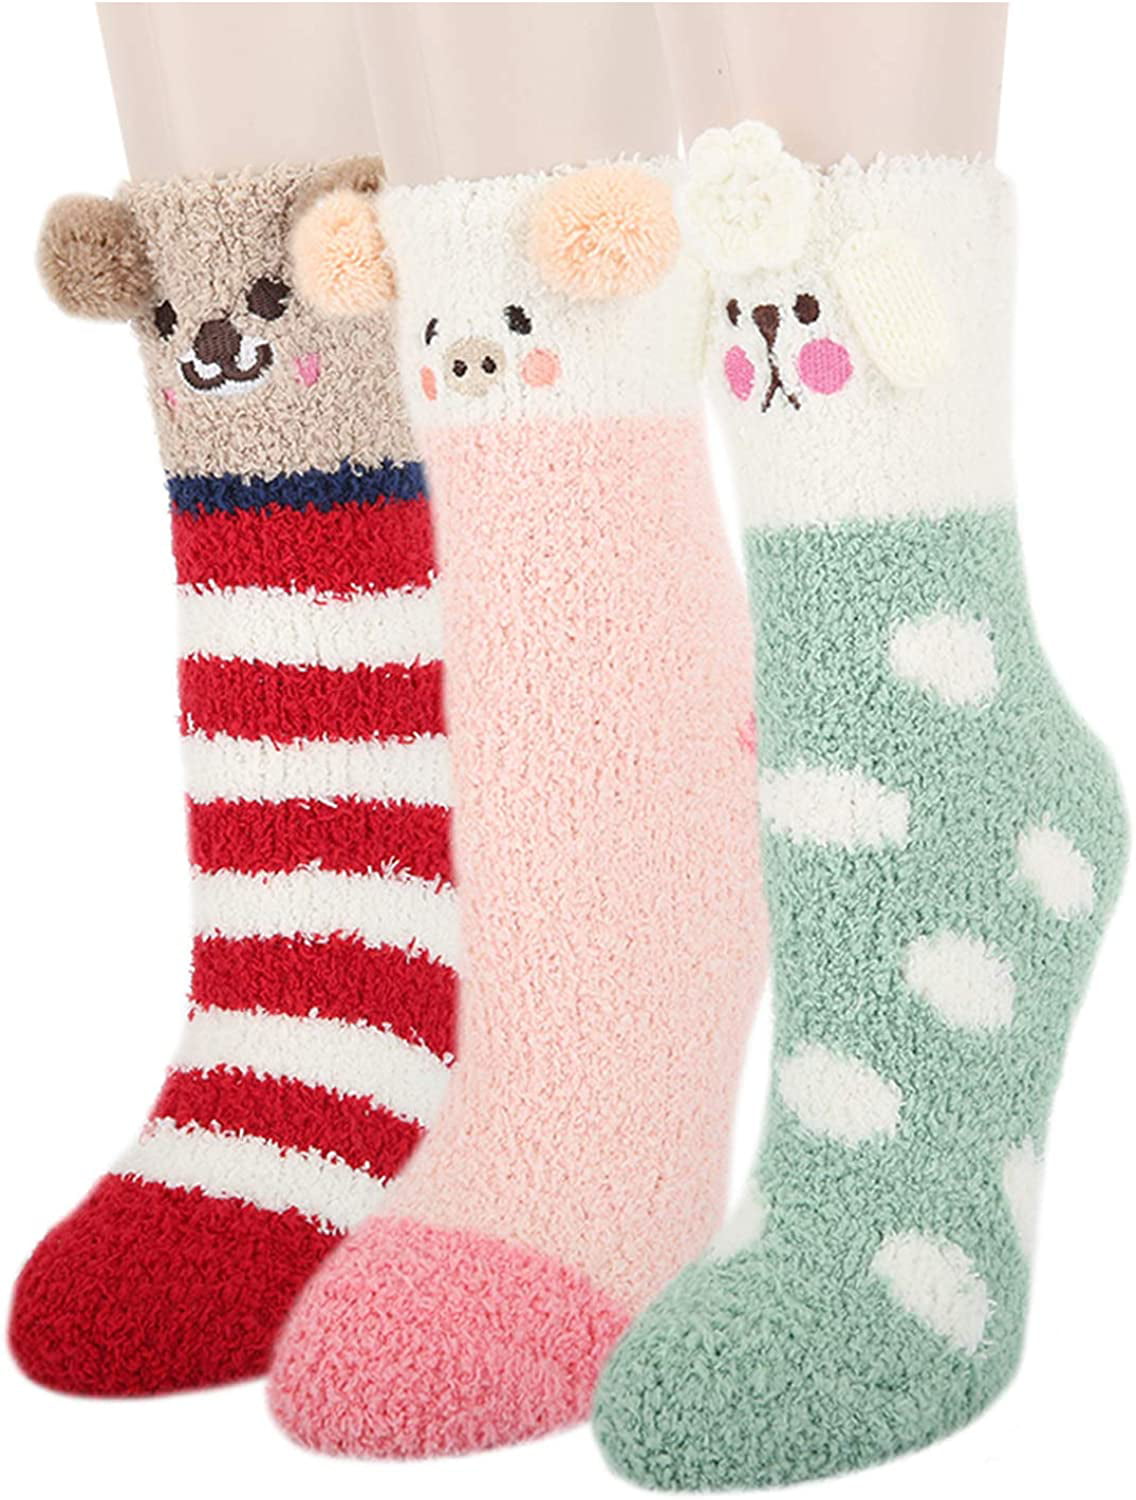 2 Pairs Of Cute Winter Thermal Fluffy Socks Women Cat Design Super Soft Warm Thickened Cozy Fuzzy Fleece-Lined Floor Medium Tube Socks Plush Coral Fleece Sleep Home For Girls